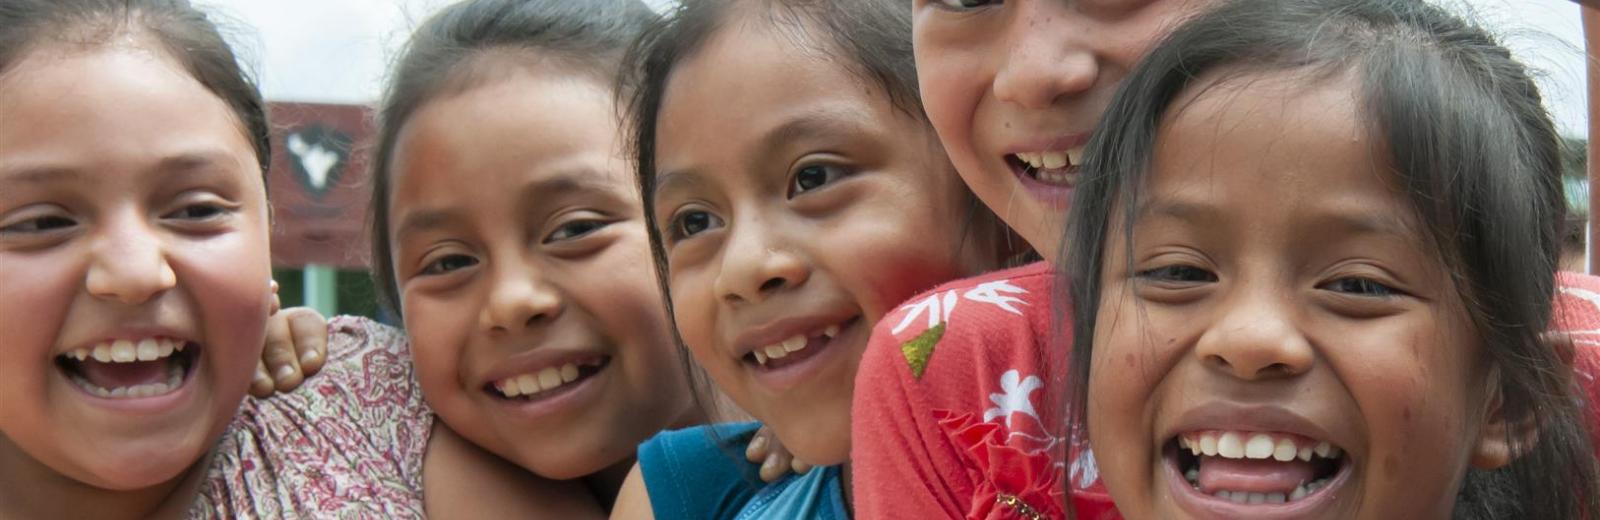 Five laughing girls in Guatemala